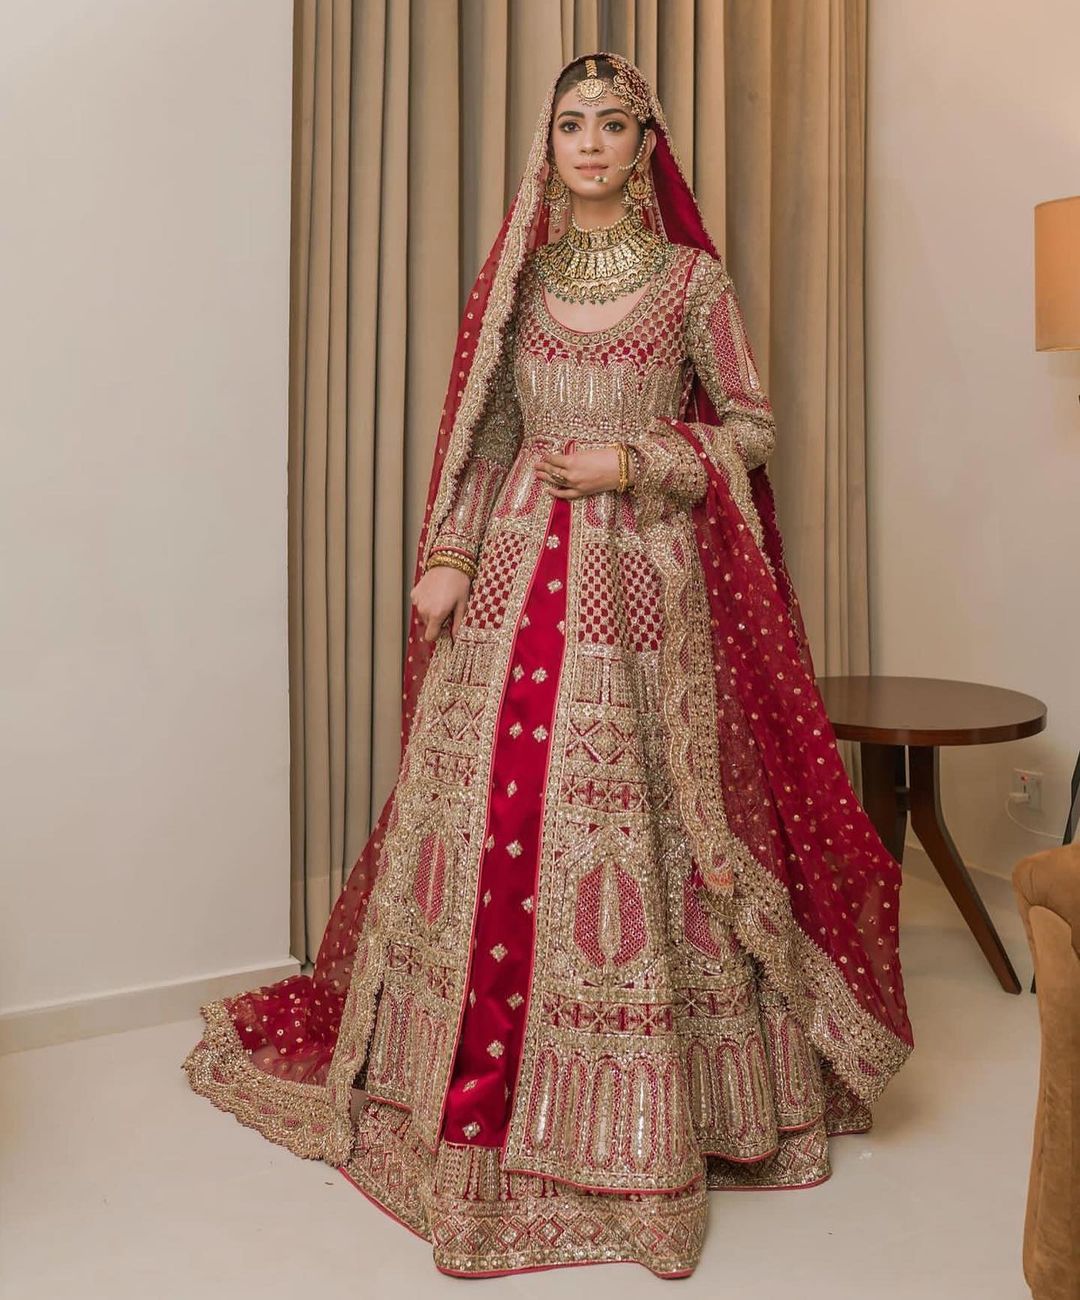 Indian Bridal Lehenga Designs That Are Hot This Wedding Season